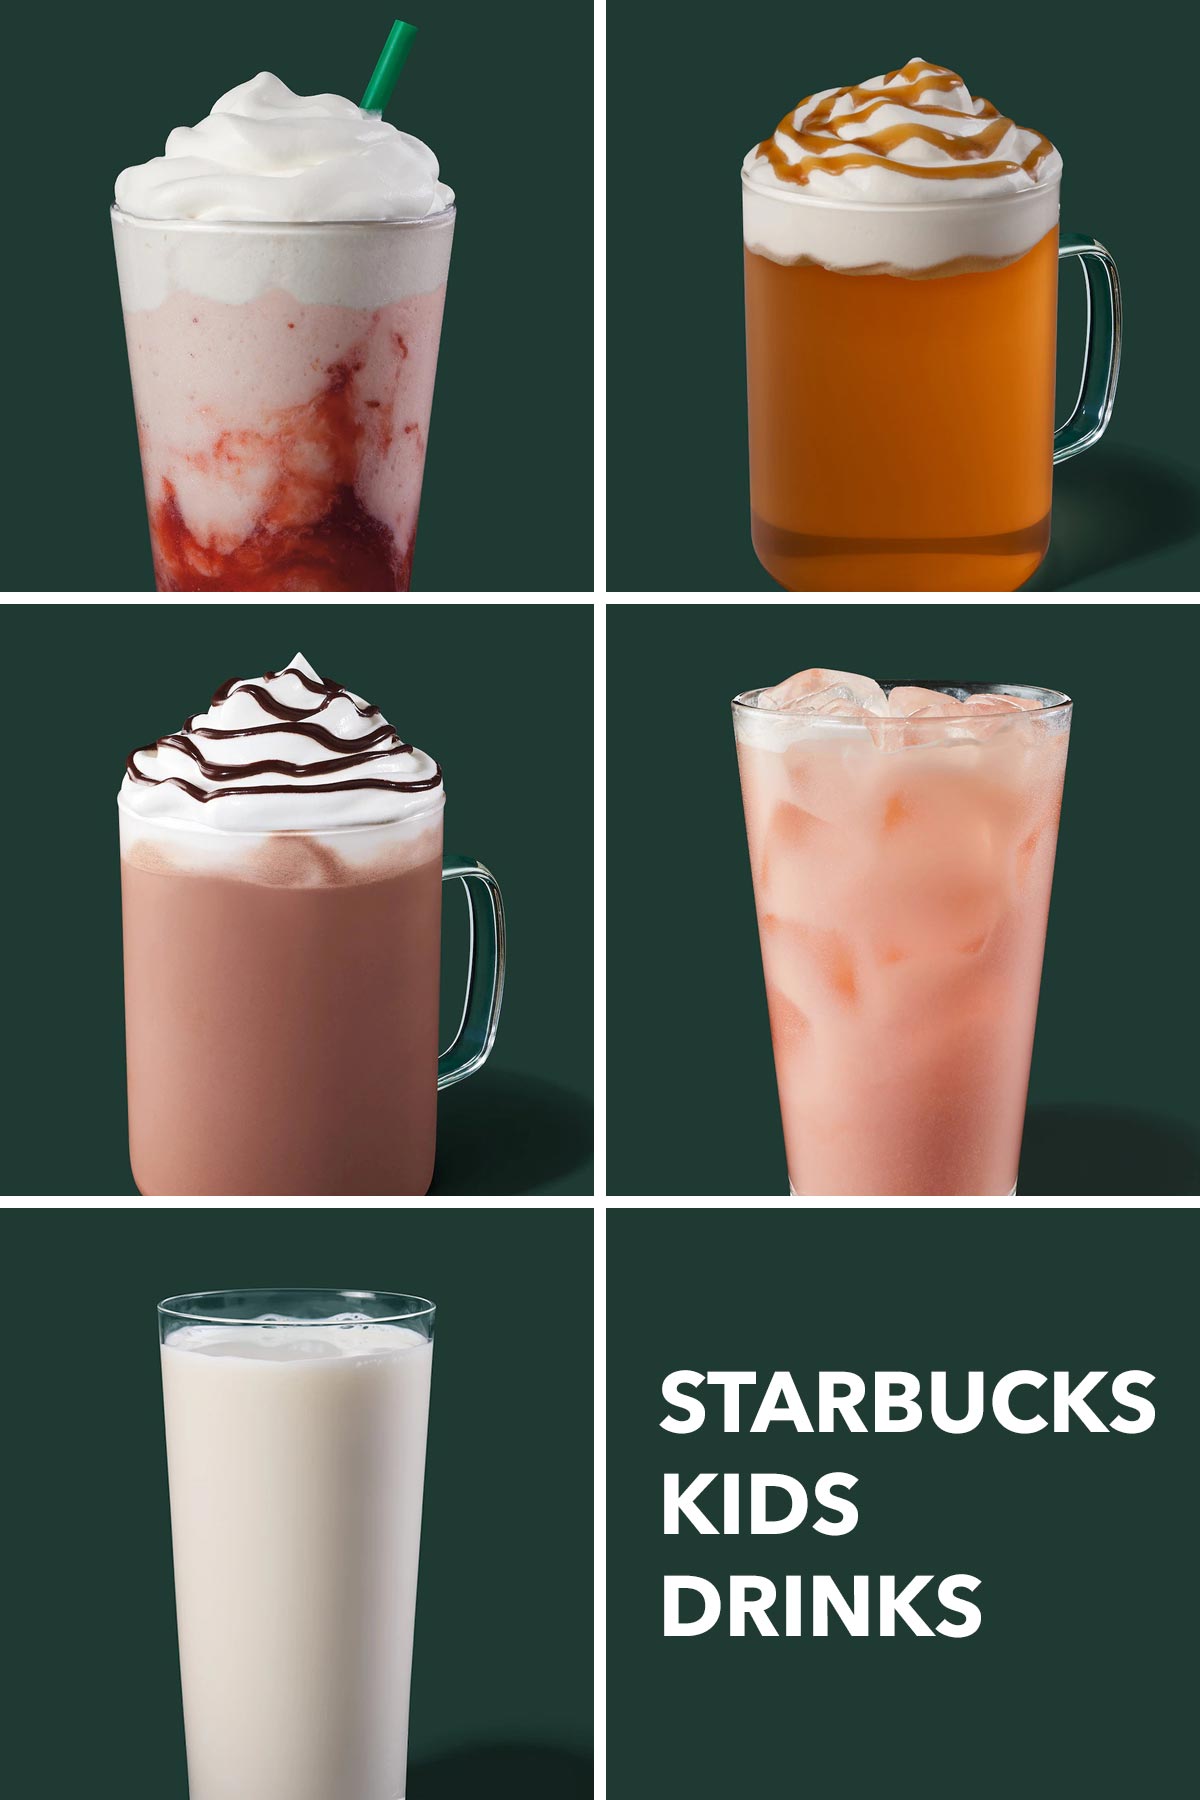 Vijf drankfoto's met kindvriendelijke Starbucks-drankjes.